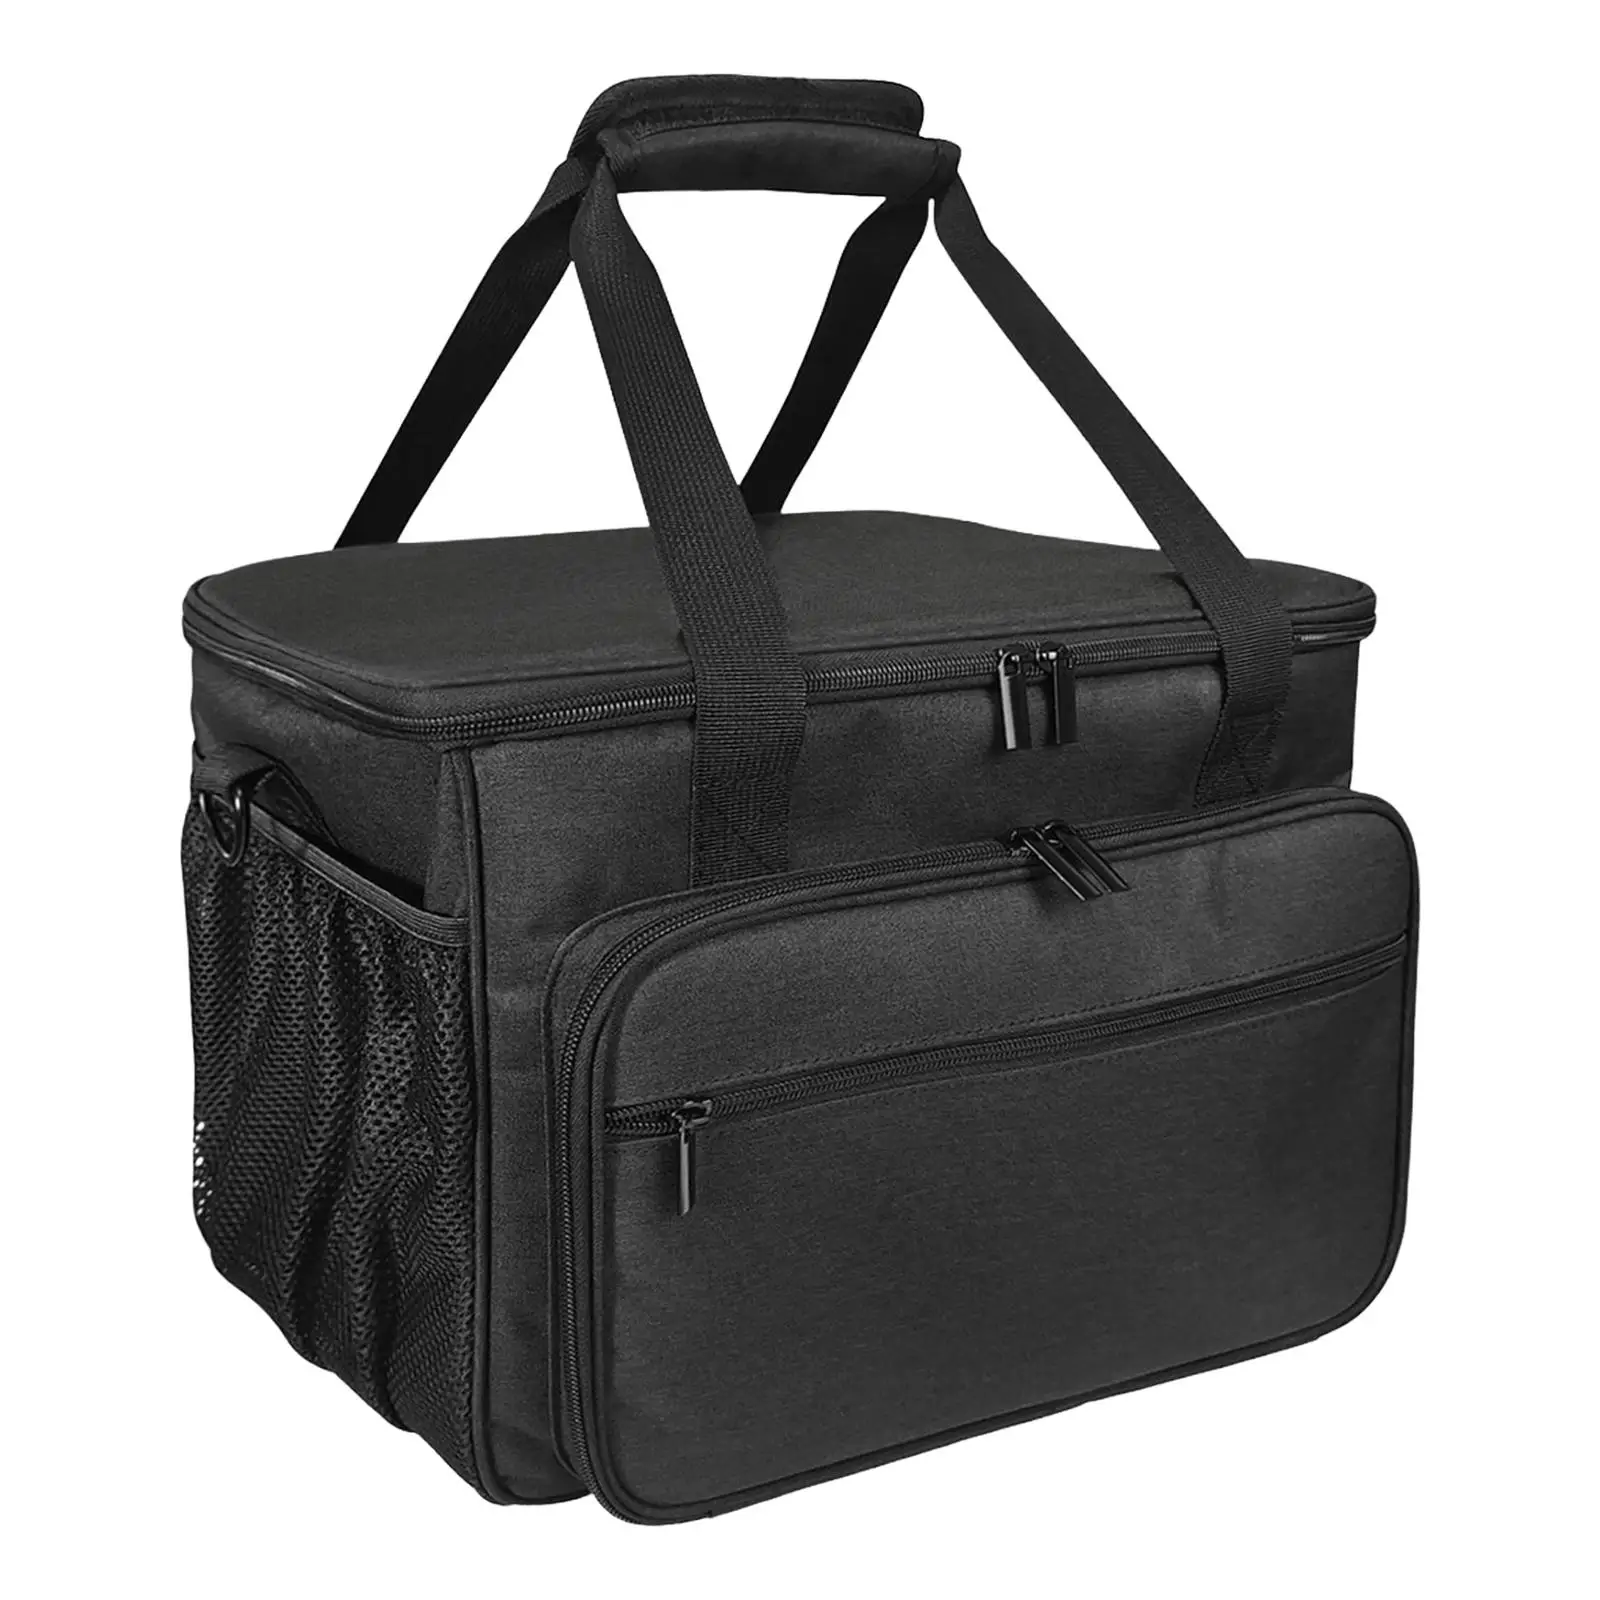 Vacuum Cleaner Accessories Storage Bag with Handle Zipper Closure Carry Bag Dustproof Vacuum Accessories Tote Bag Power Cord